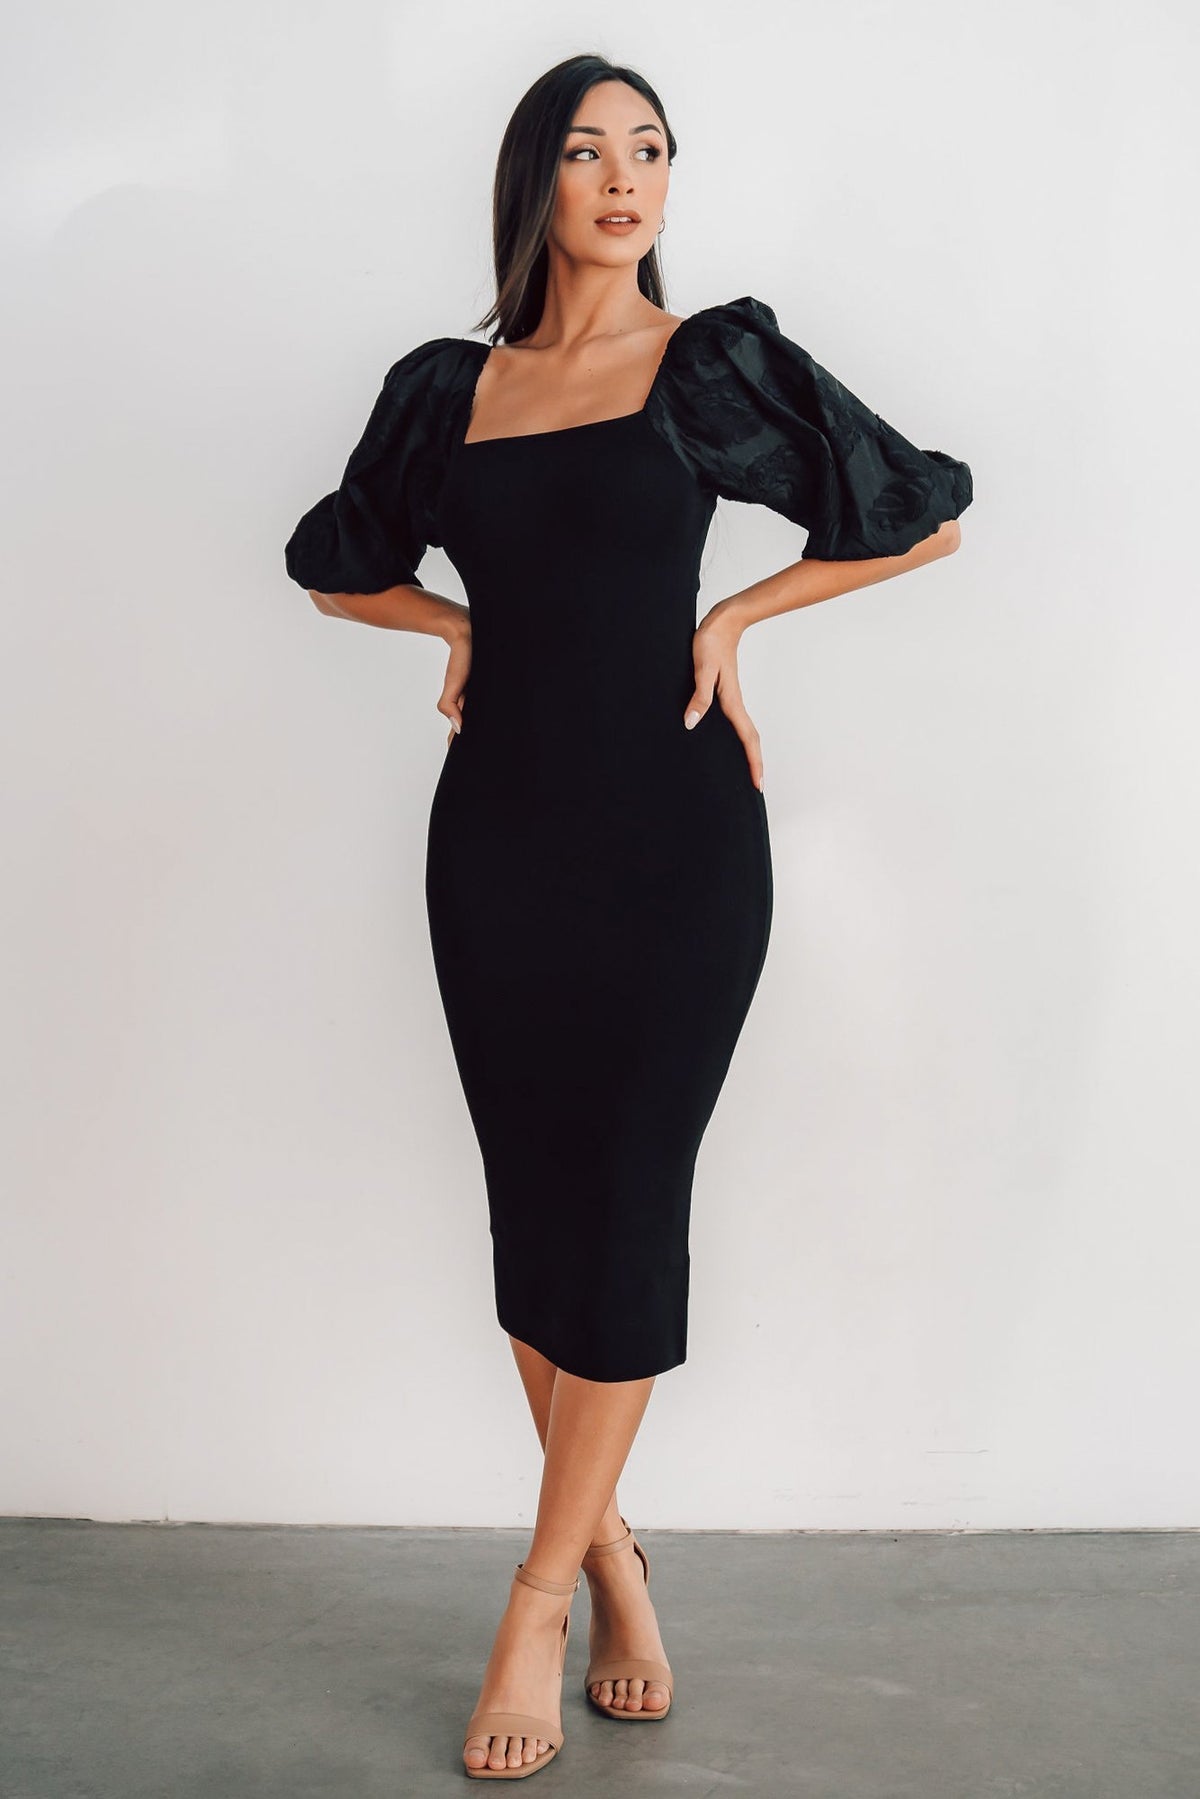 RESTOCK: Emlyn Sleek Bodycon Dress in Black